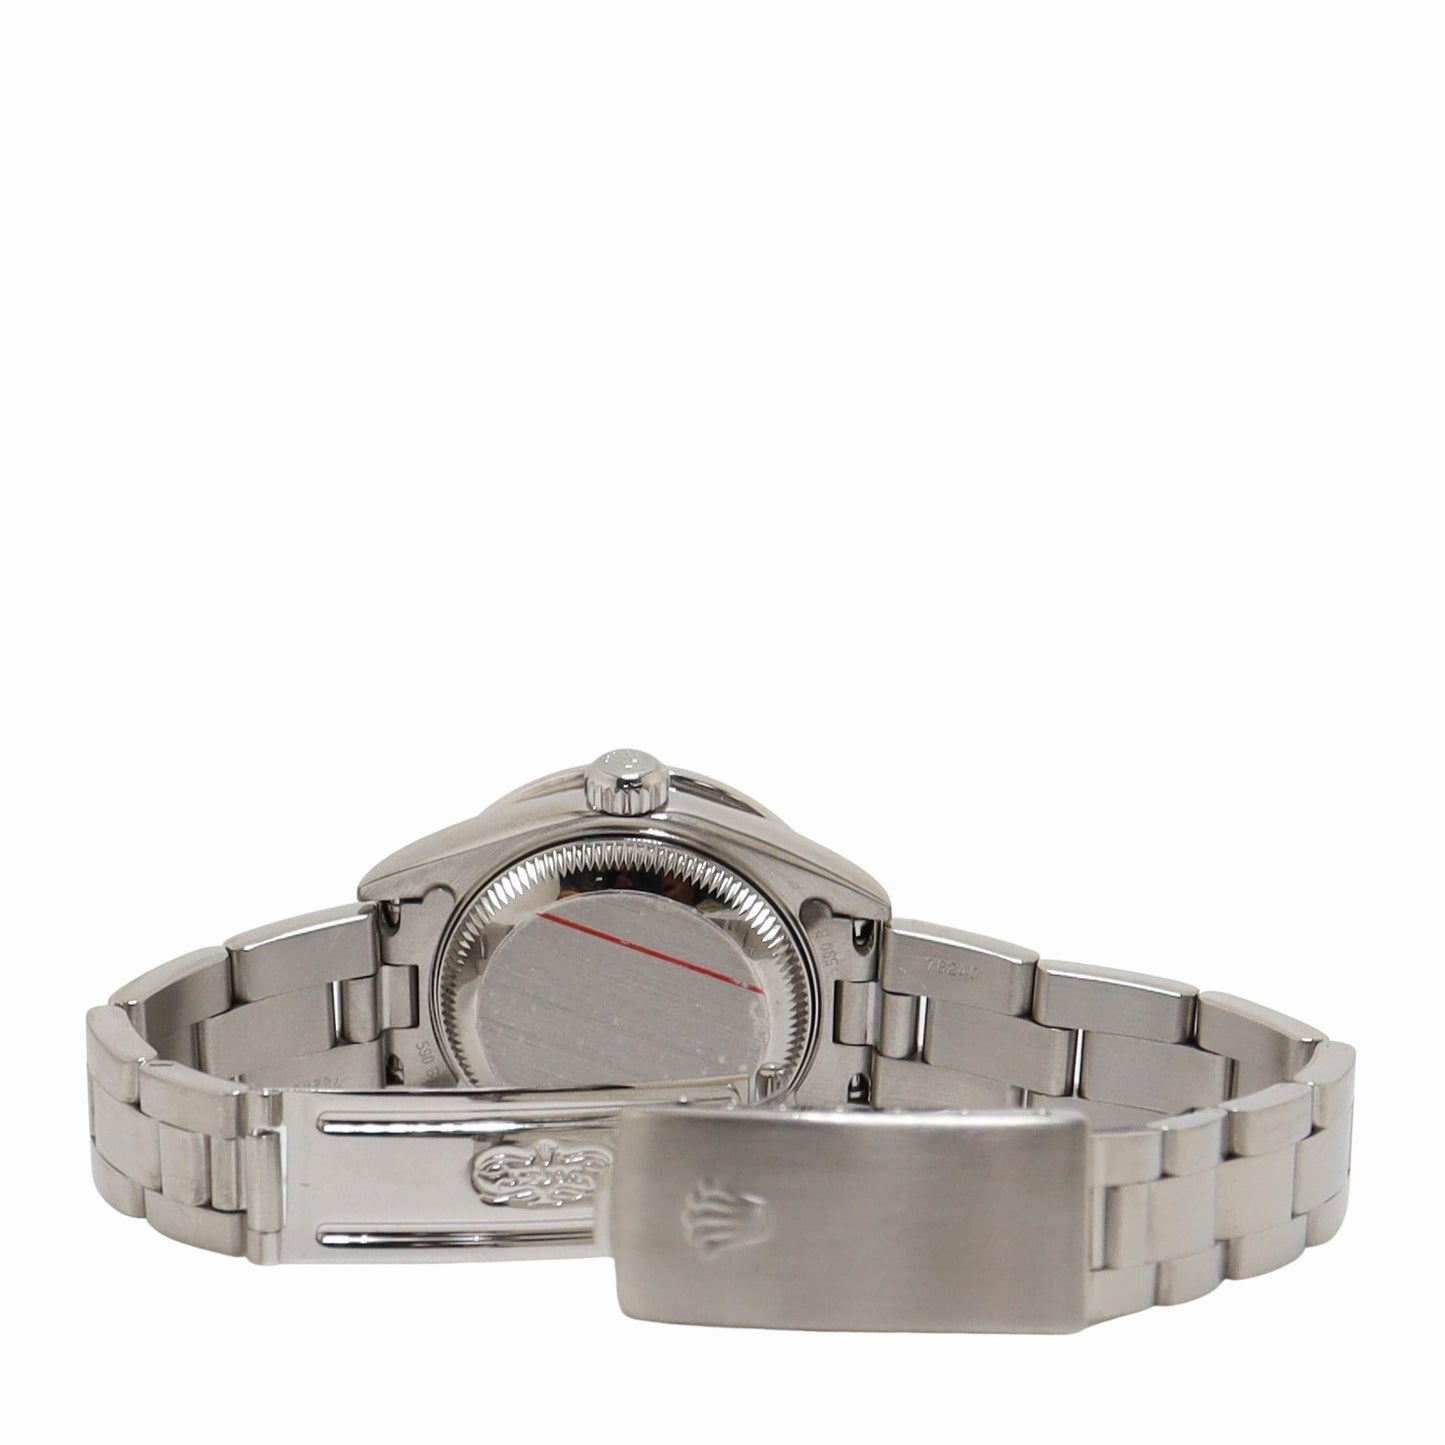 Rolex Datejust 26mm Stainless Steel White Arabic & Stick Dial Watch Reference# 79160 - Happy Jewelers Fine Jewelry Lifetime Warranty